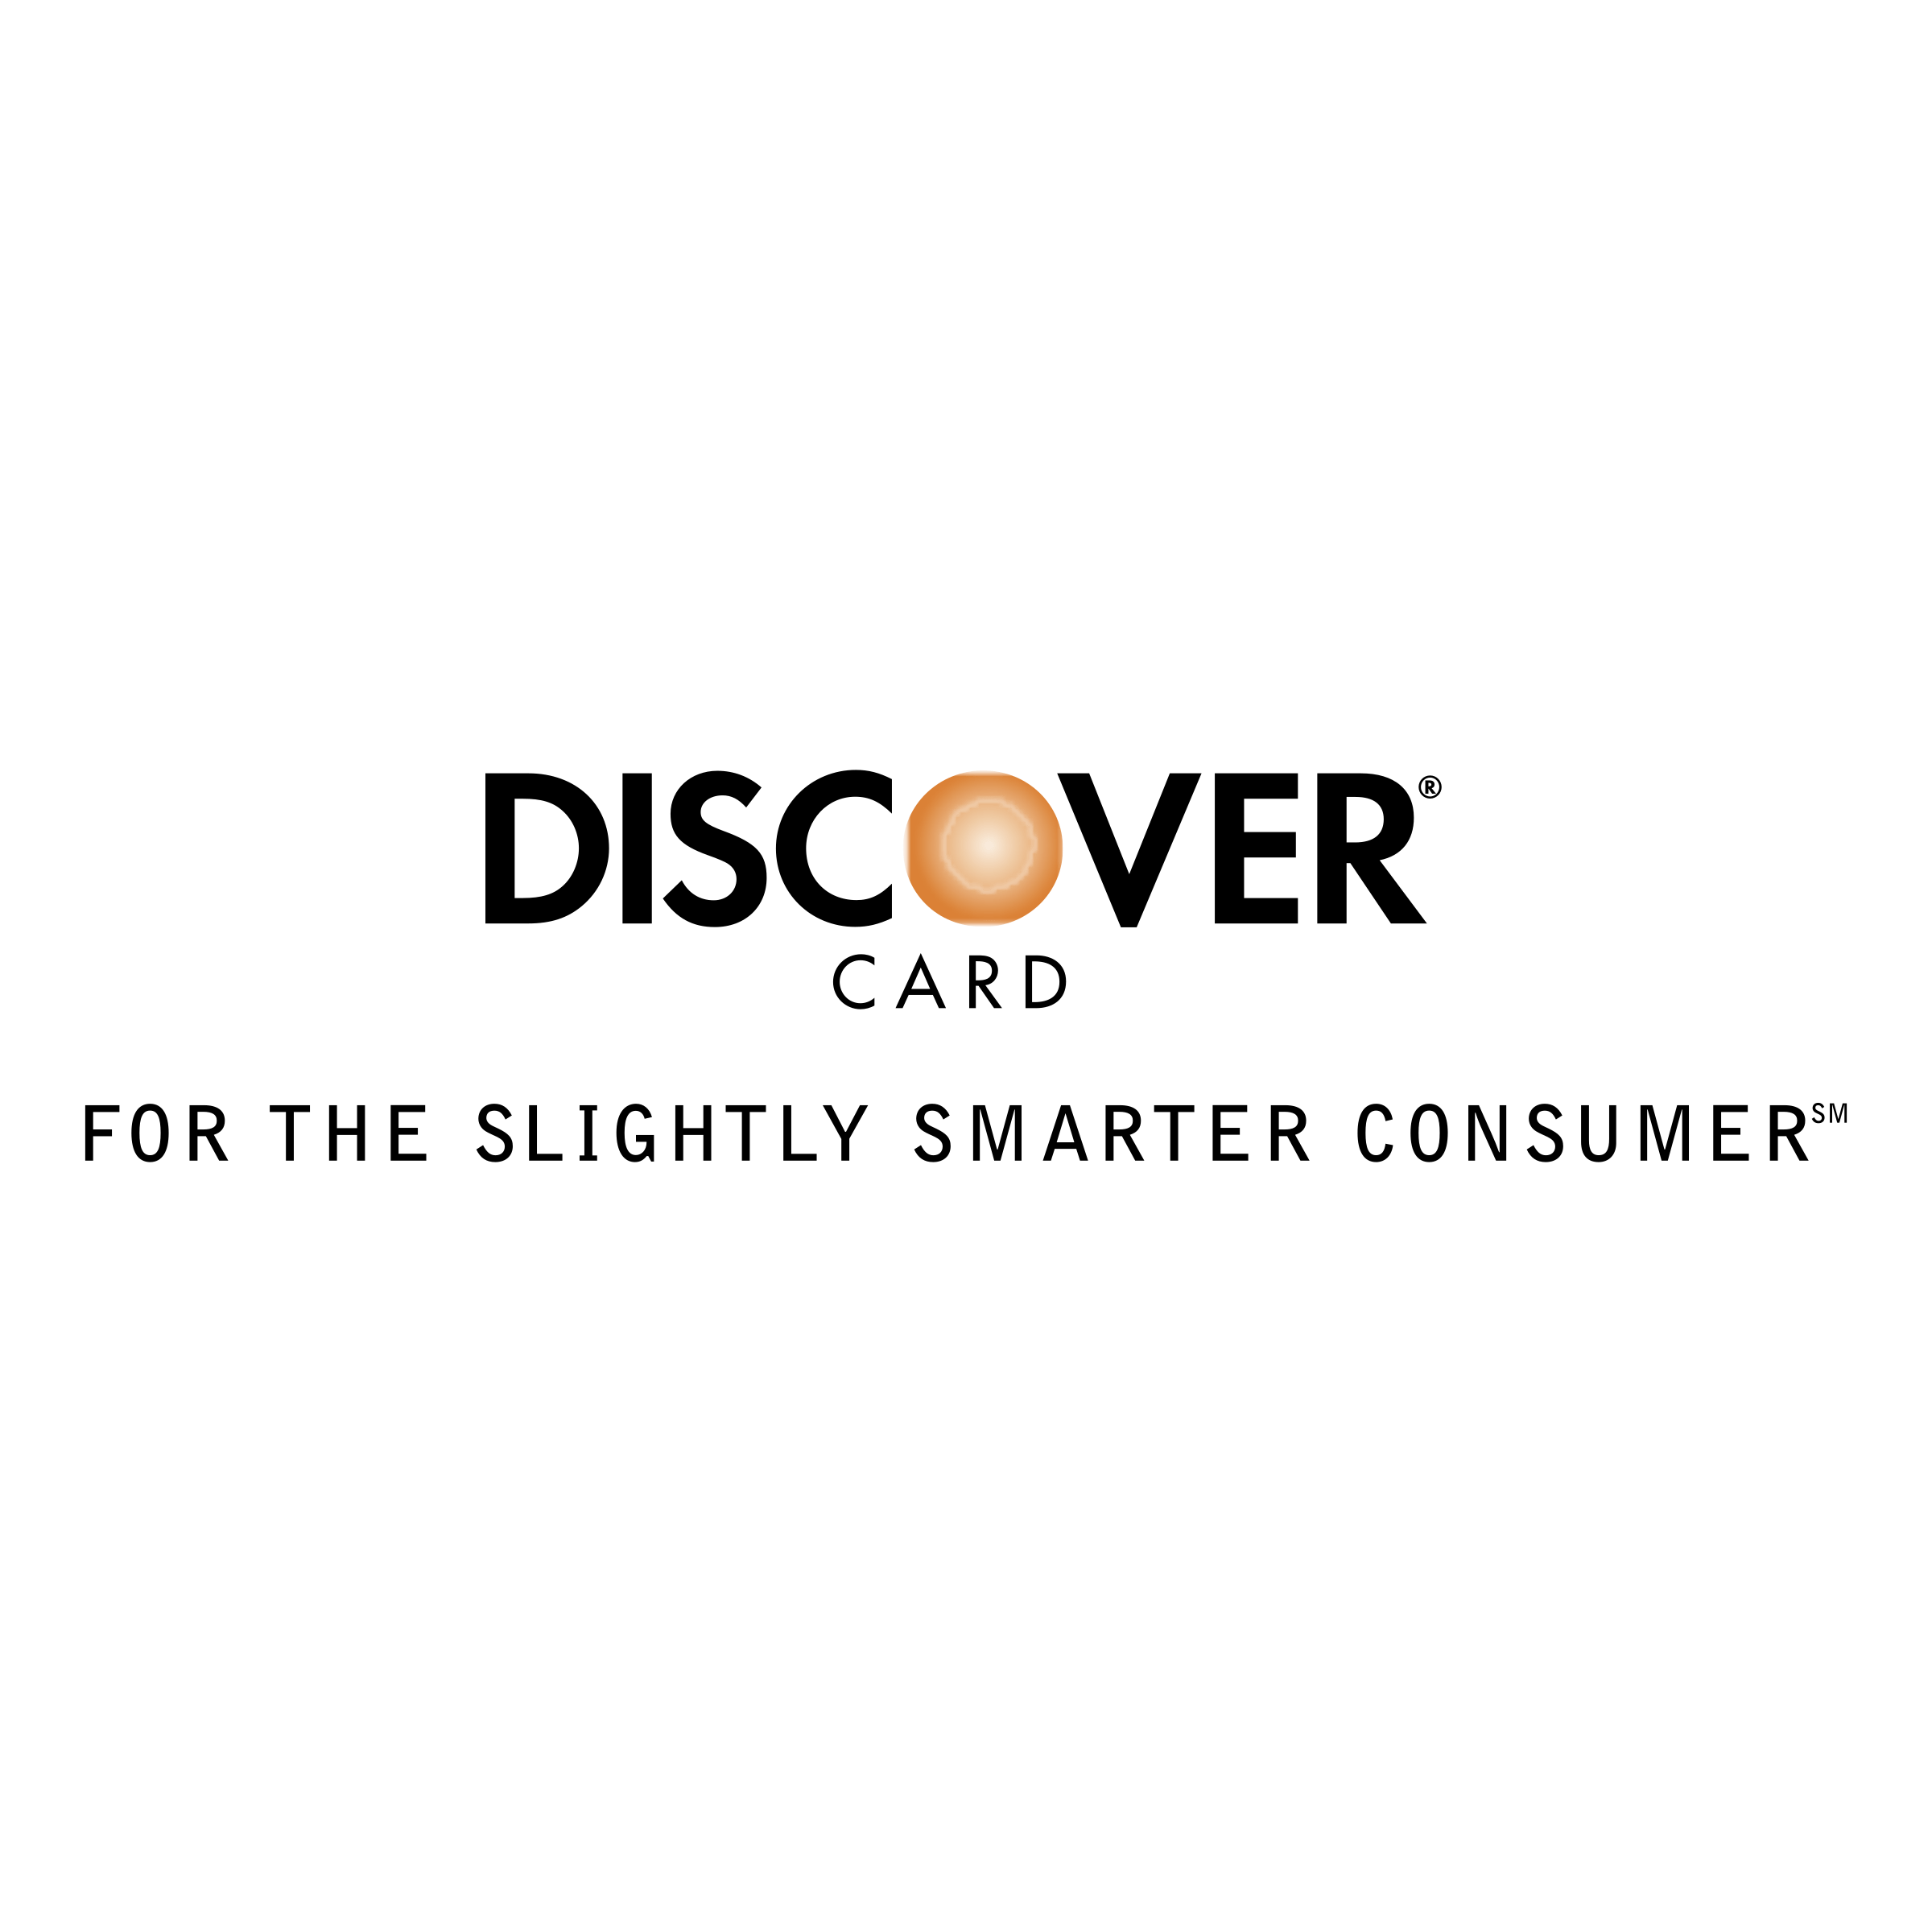 Discover Card Logo - Discover Card Logo PNG Transparent & SVG Vector - Freebie Supply